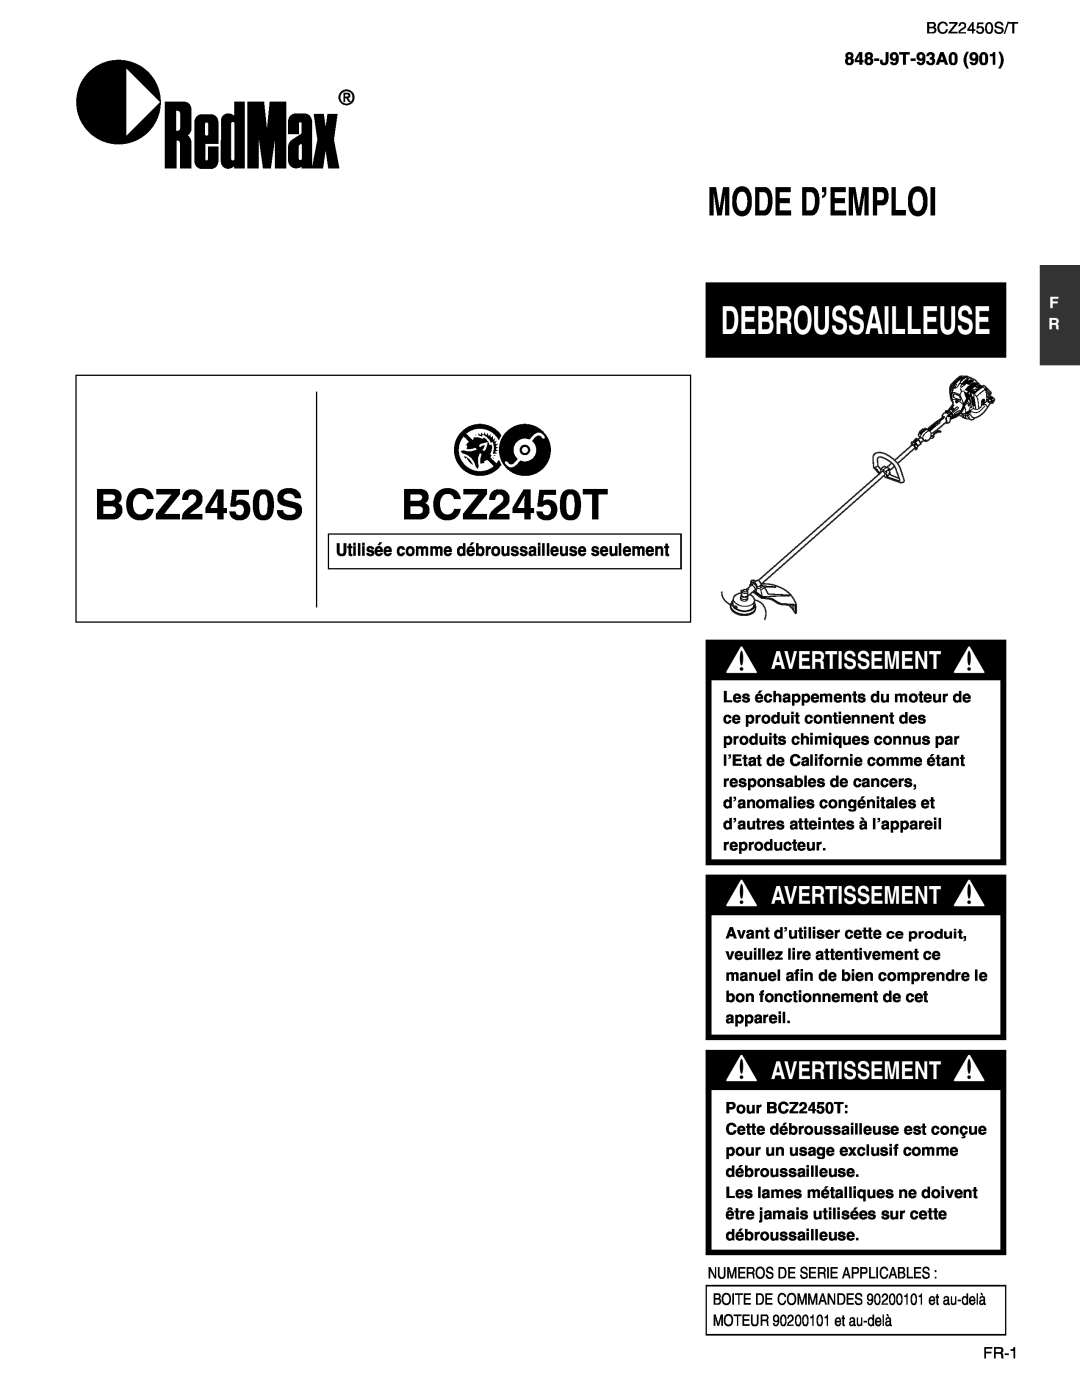 RedMax BCZ2450S manual Mode D’Emploi, BCZ2450T, Debroussailleuse R, Avertissement, 848-J9T-93A0 